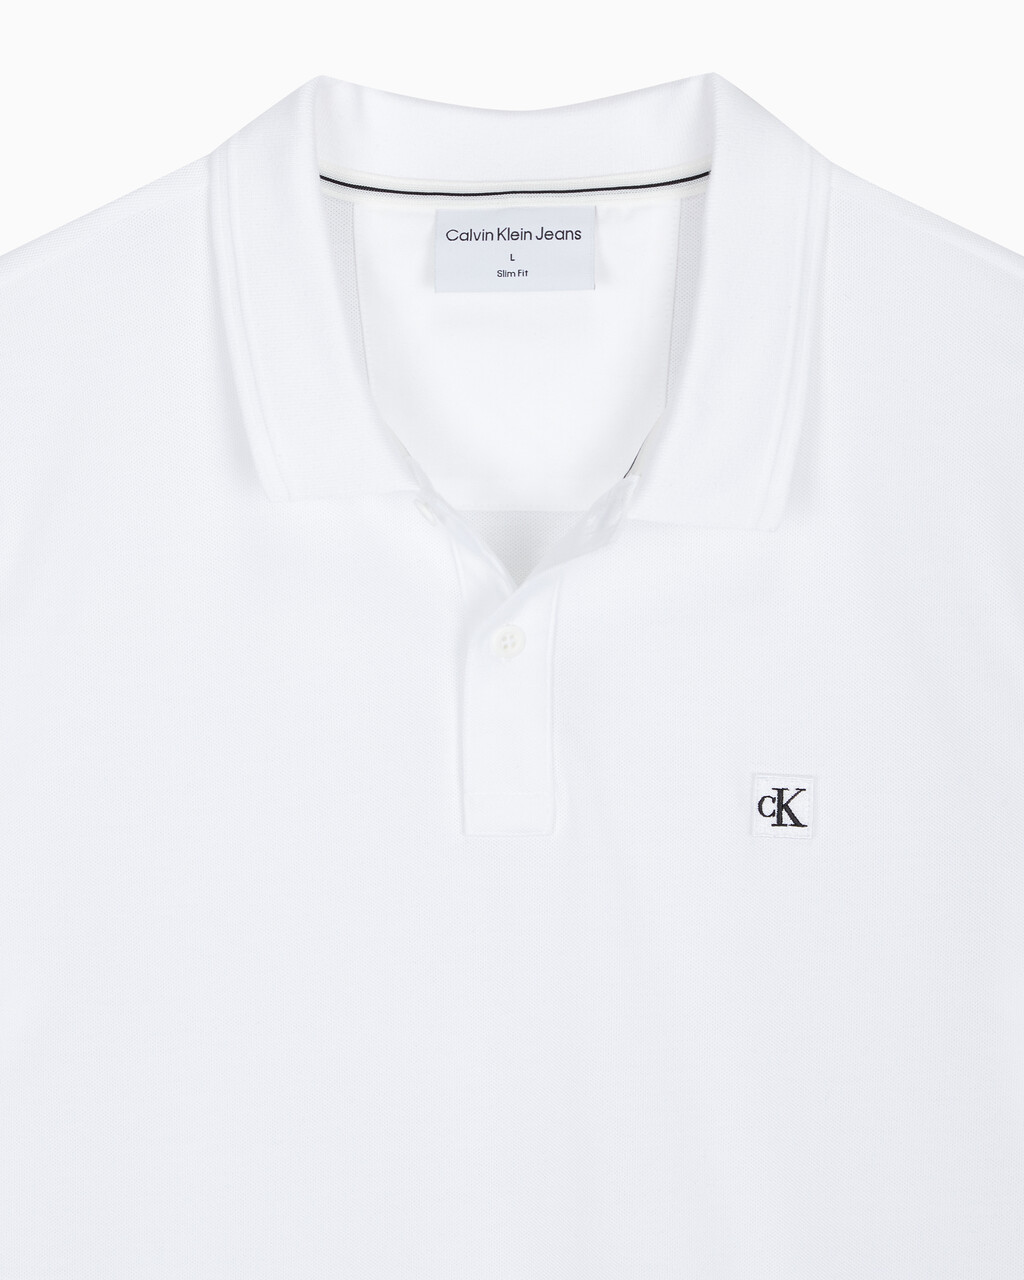 Buy 남성 슬림핏 CK 로고 뱃지  폴로 티셔츠 in color BRIGHT WHITE